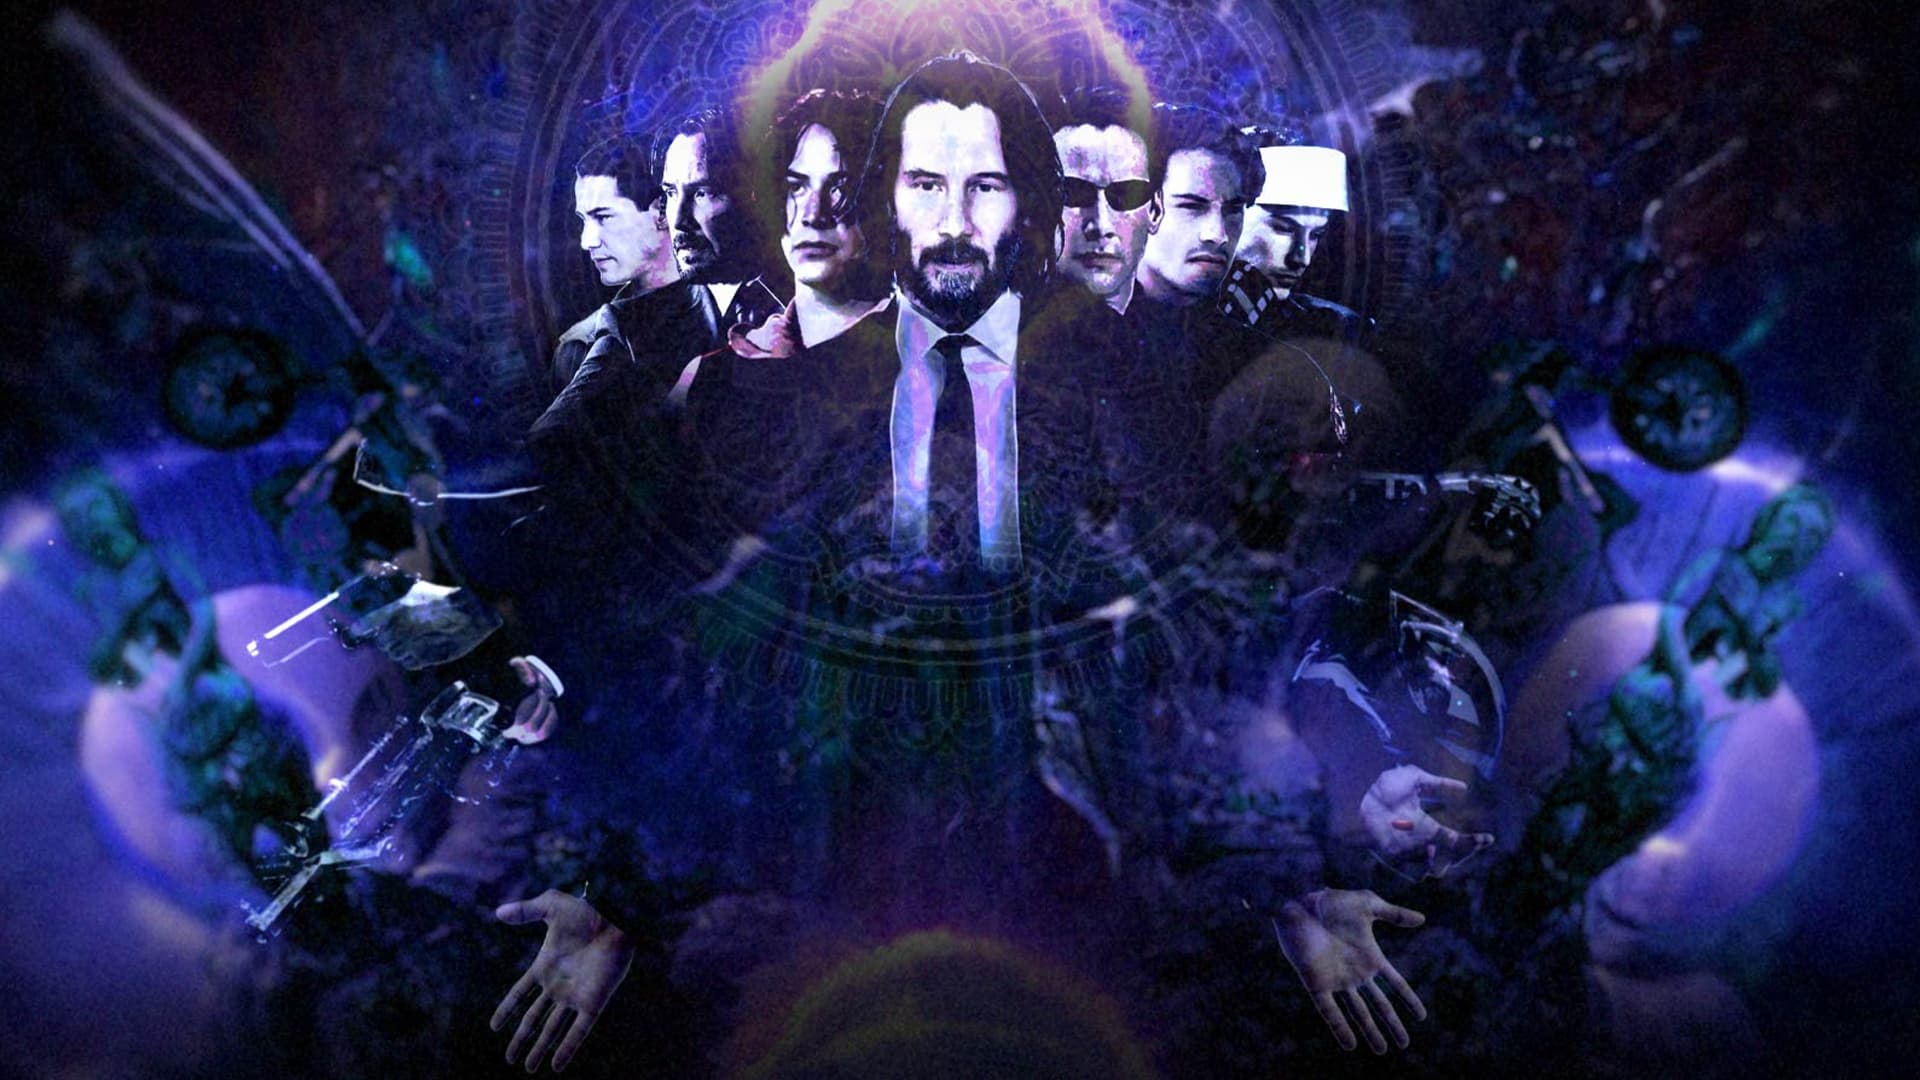 Keanu Reeves - Mesiáš z Matrixu